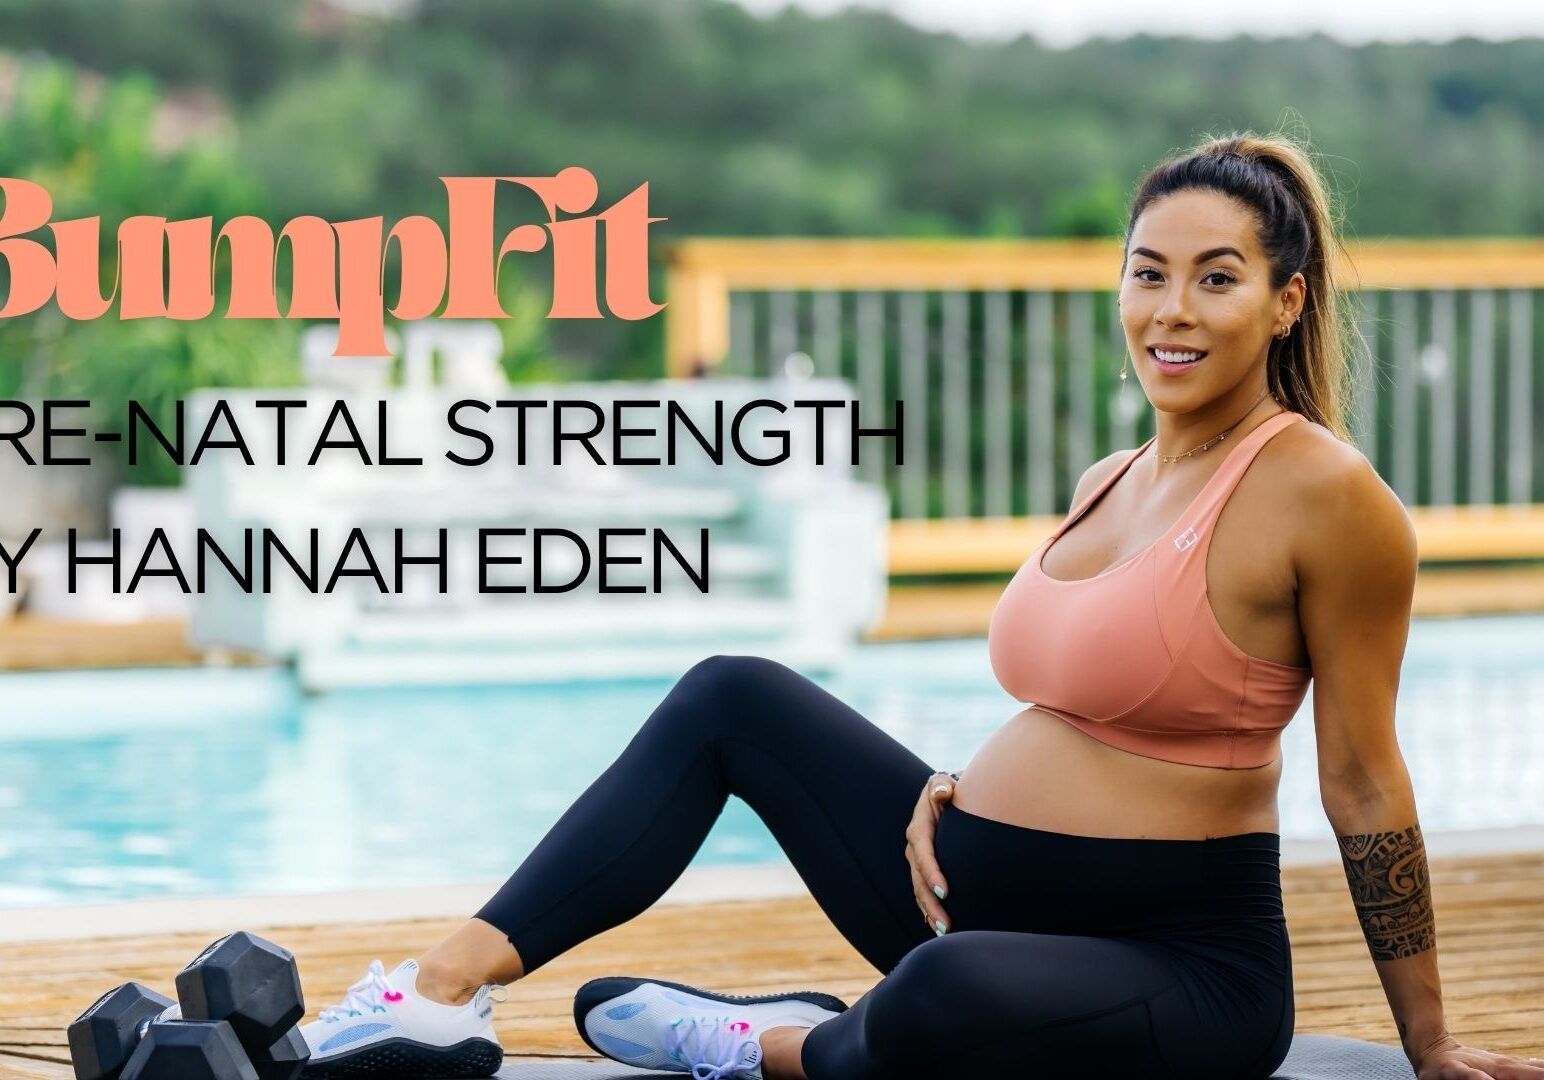 BUMPFIT COVER | HANNAH EDEN, PREGNANT, ON POOL DECK WITH DUMBBELLS